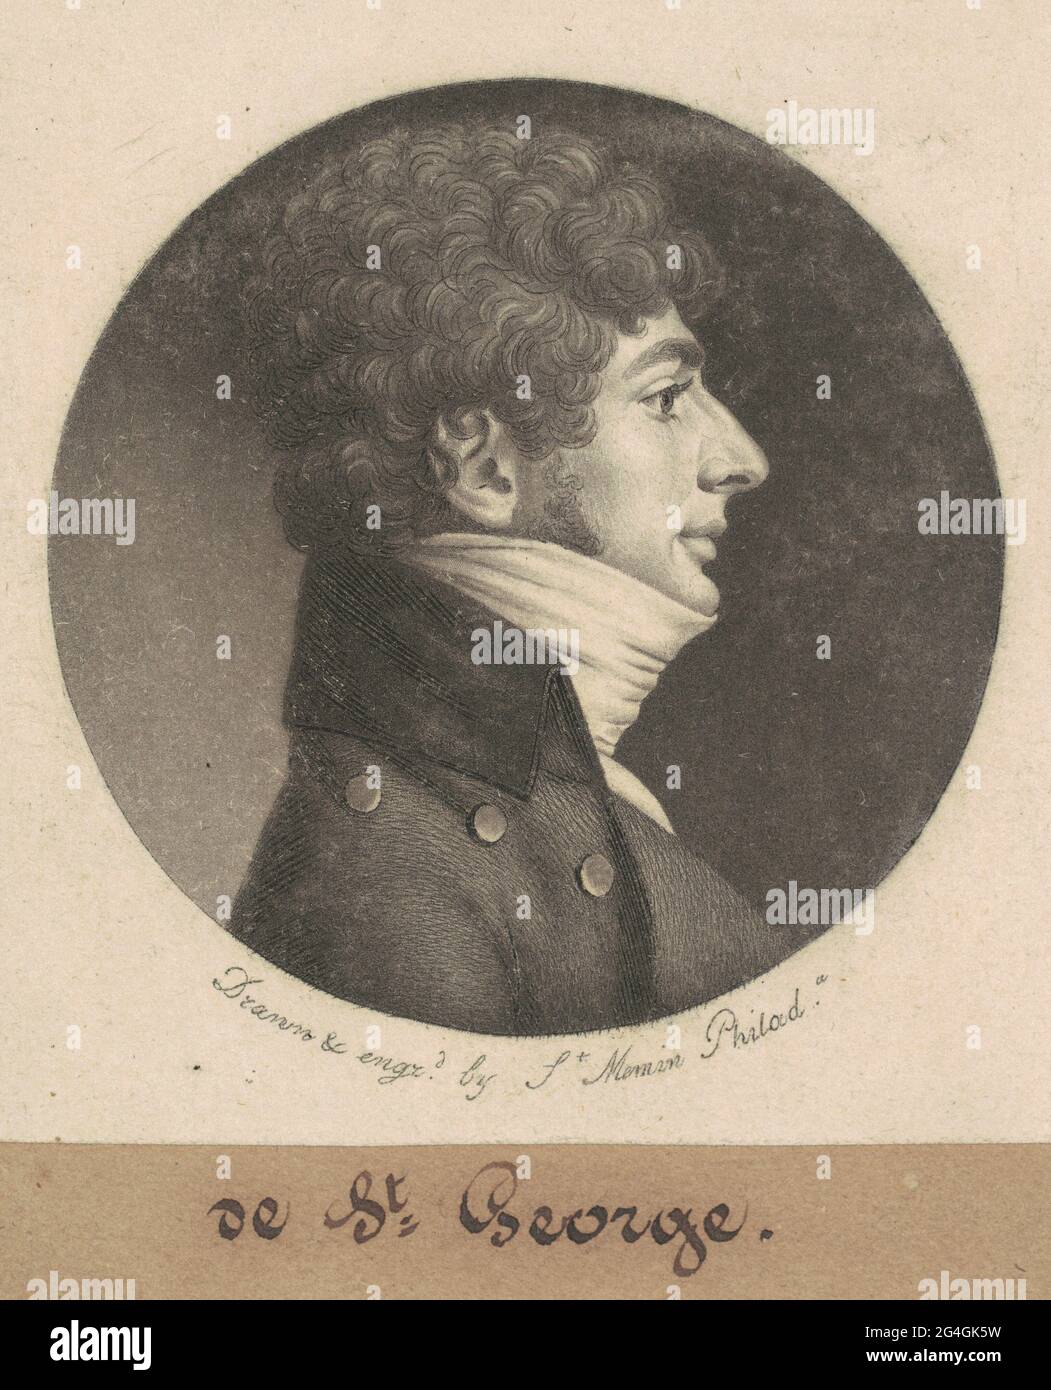 de St. George, 1800. Stock Photo